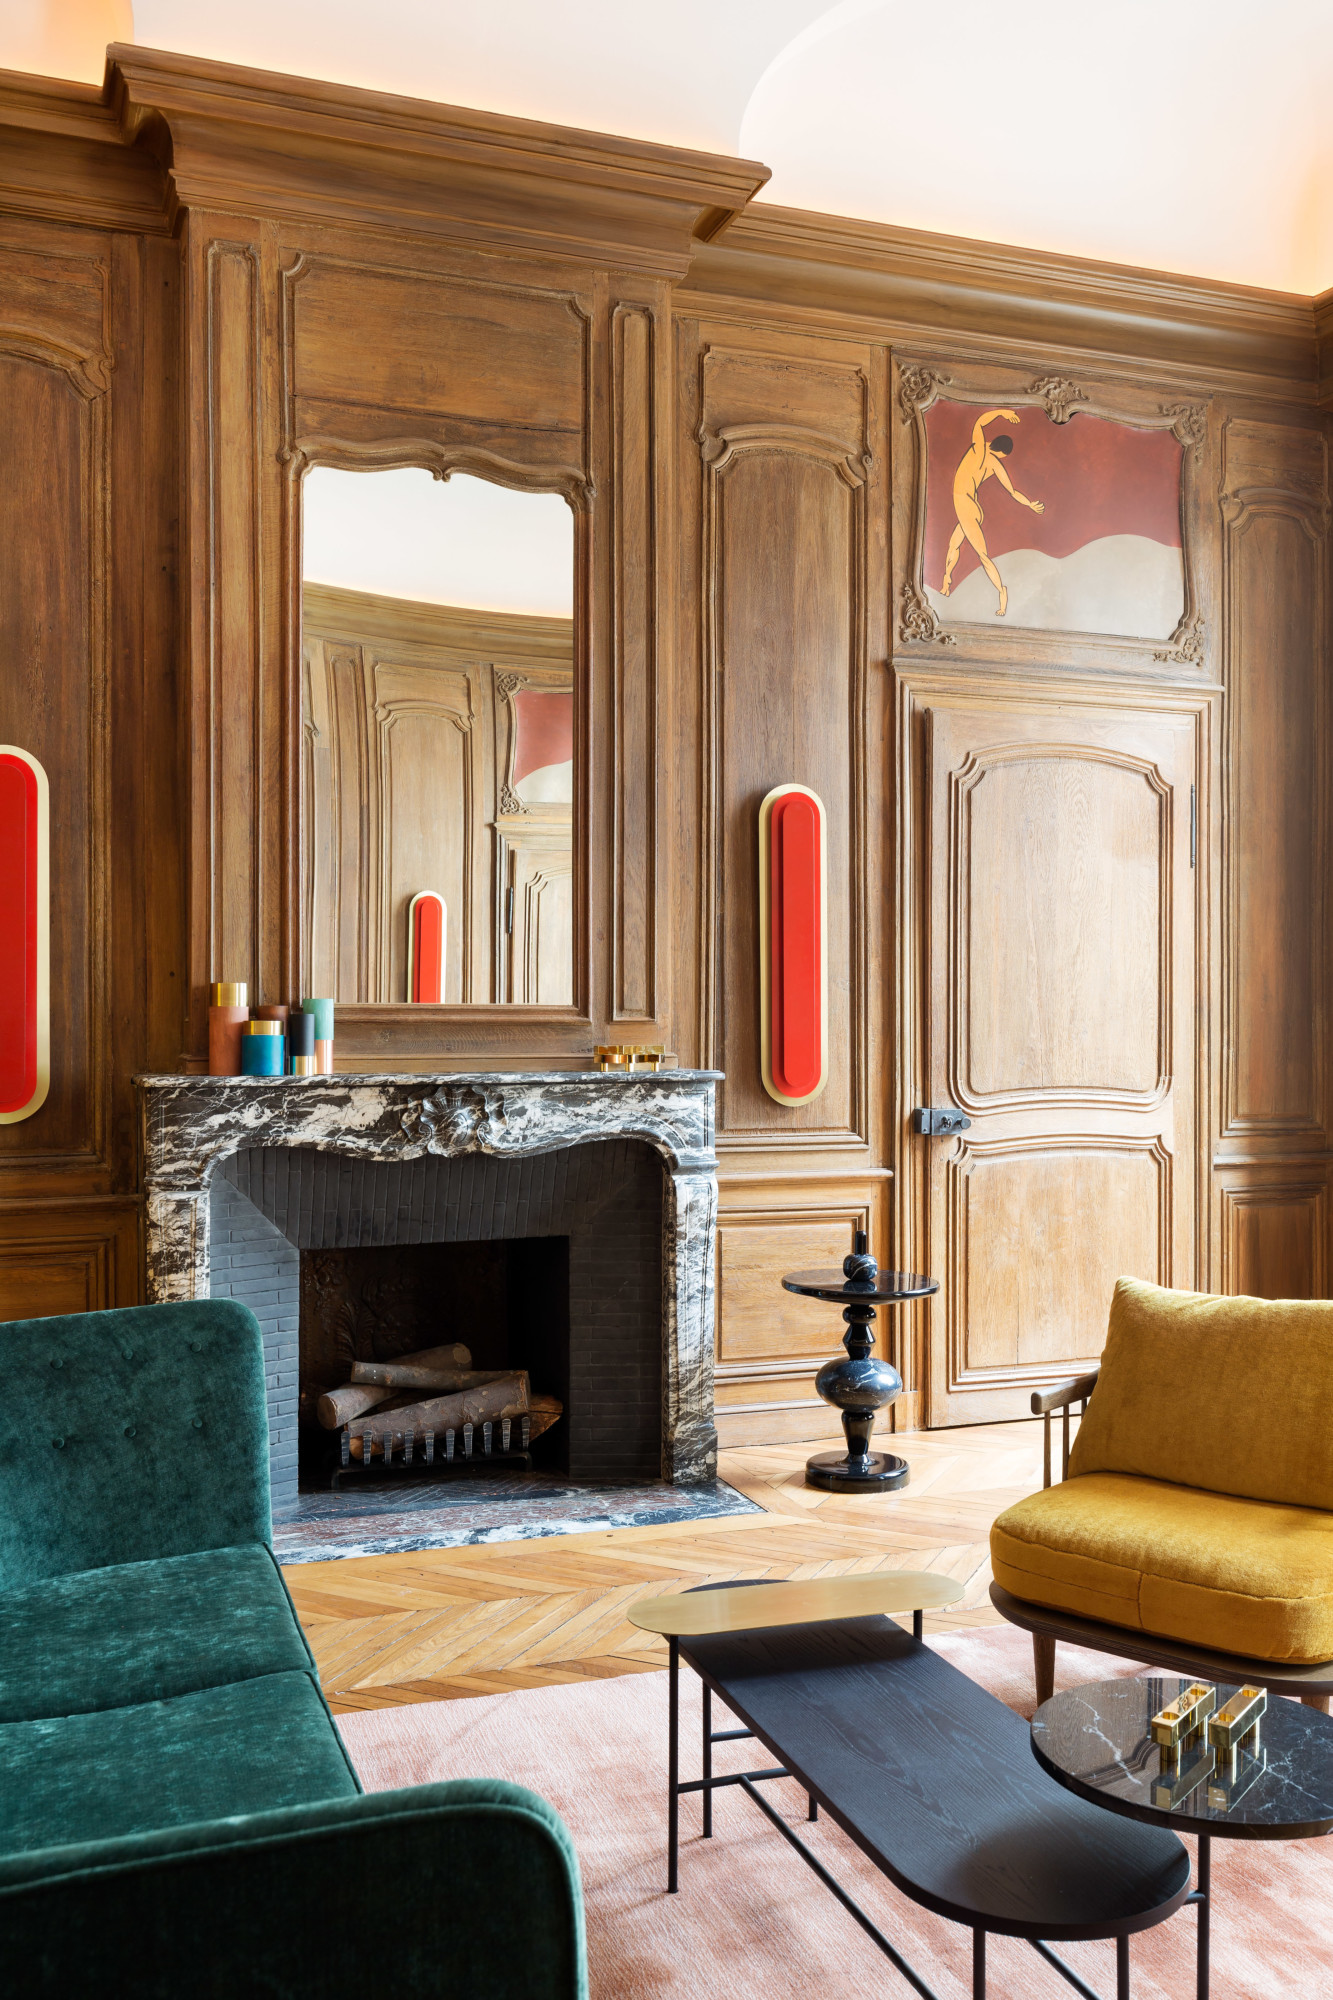 Coco Chanel's apartment – Studio Flodeau